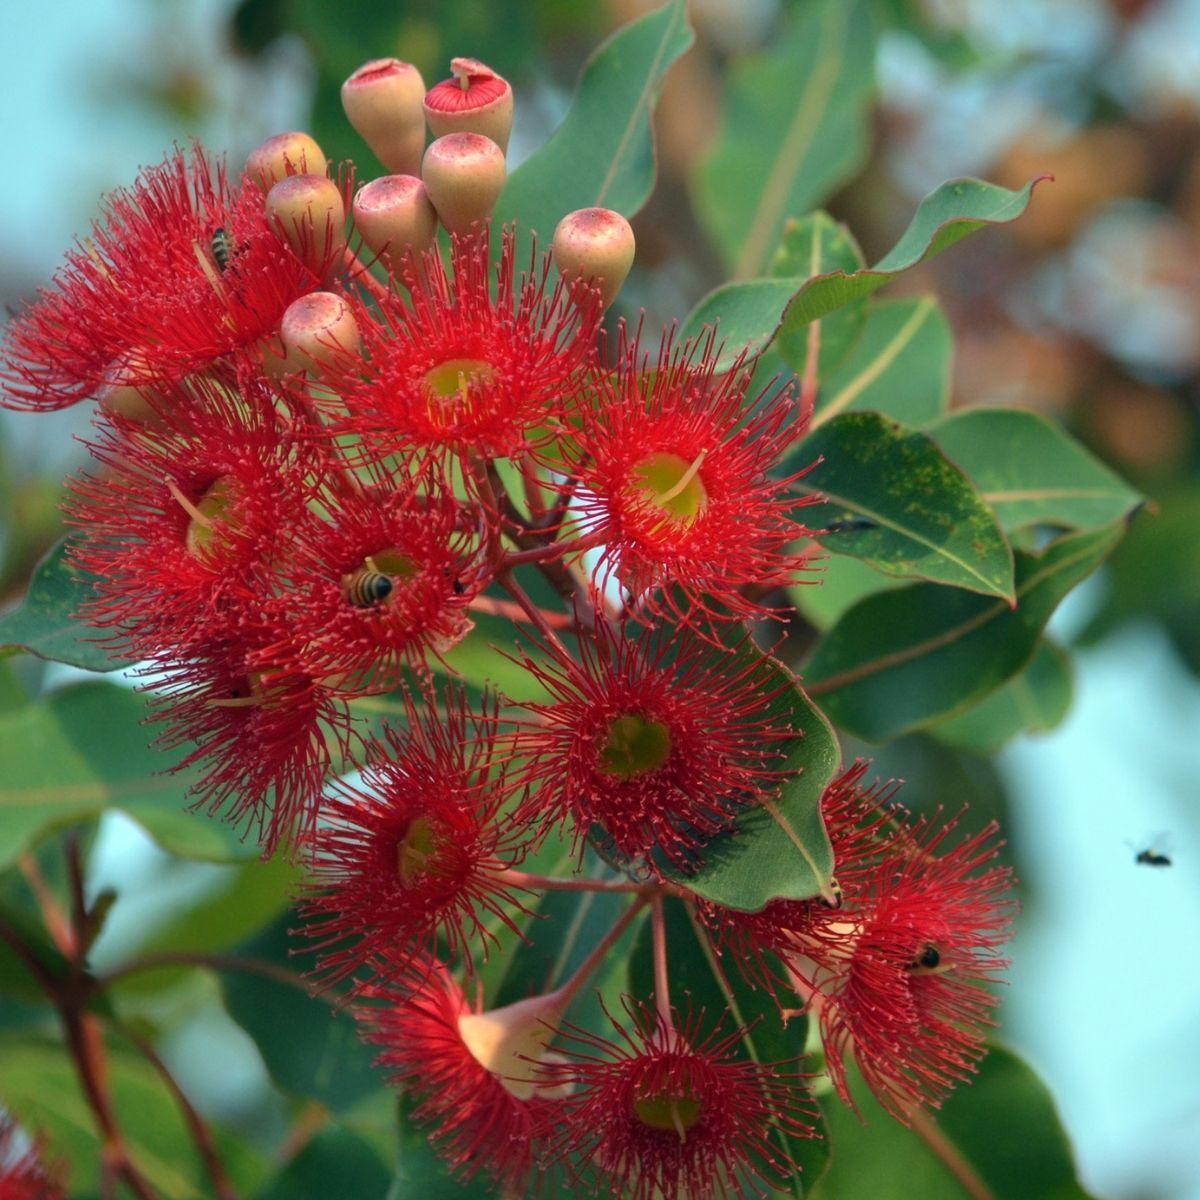 Red flowering gum